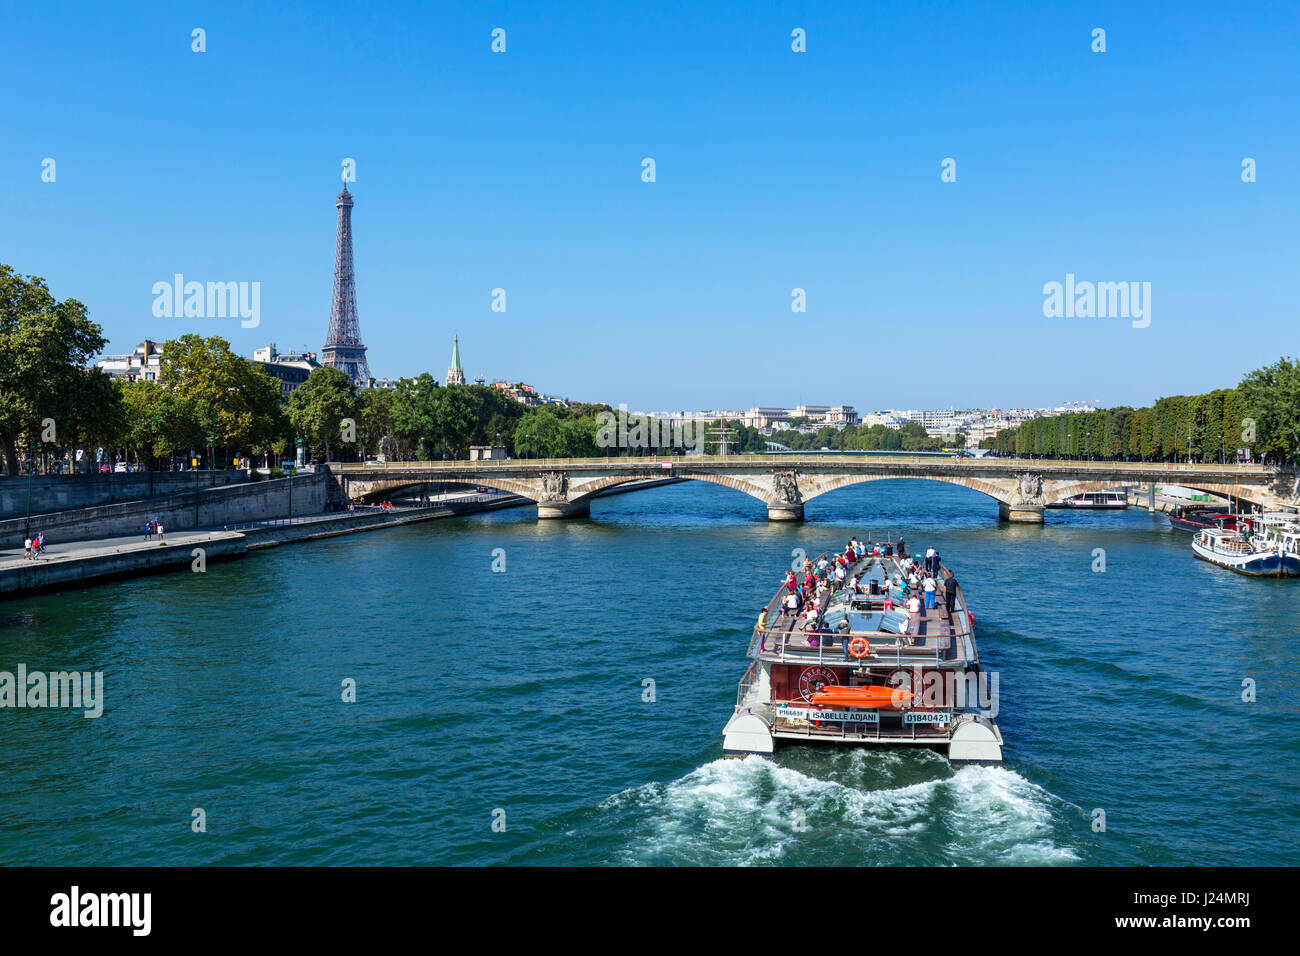 The Eiffel Tower (Tour Eiffel) and a Bateau Mouche on the River Seine, Paris, France Stock Photo